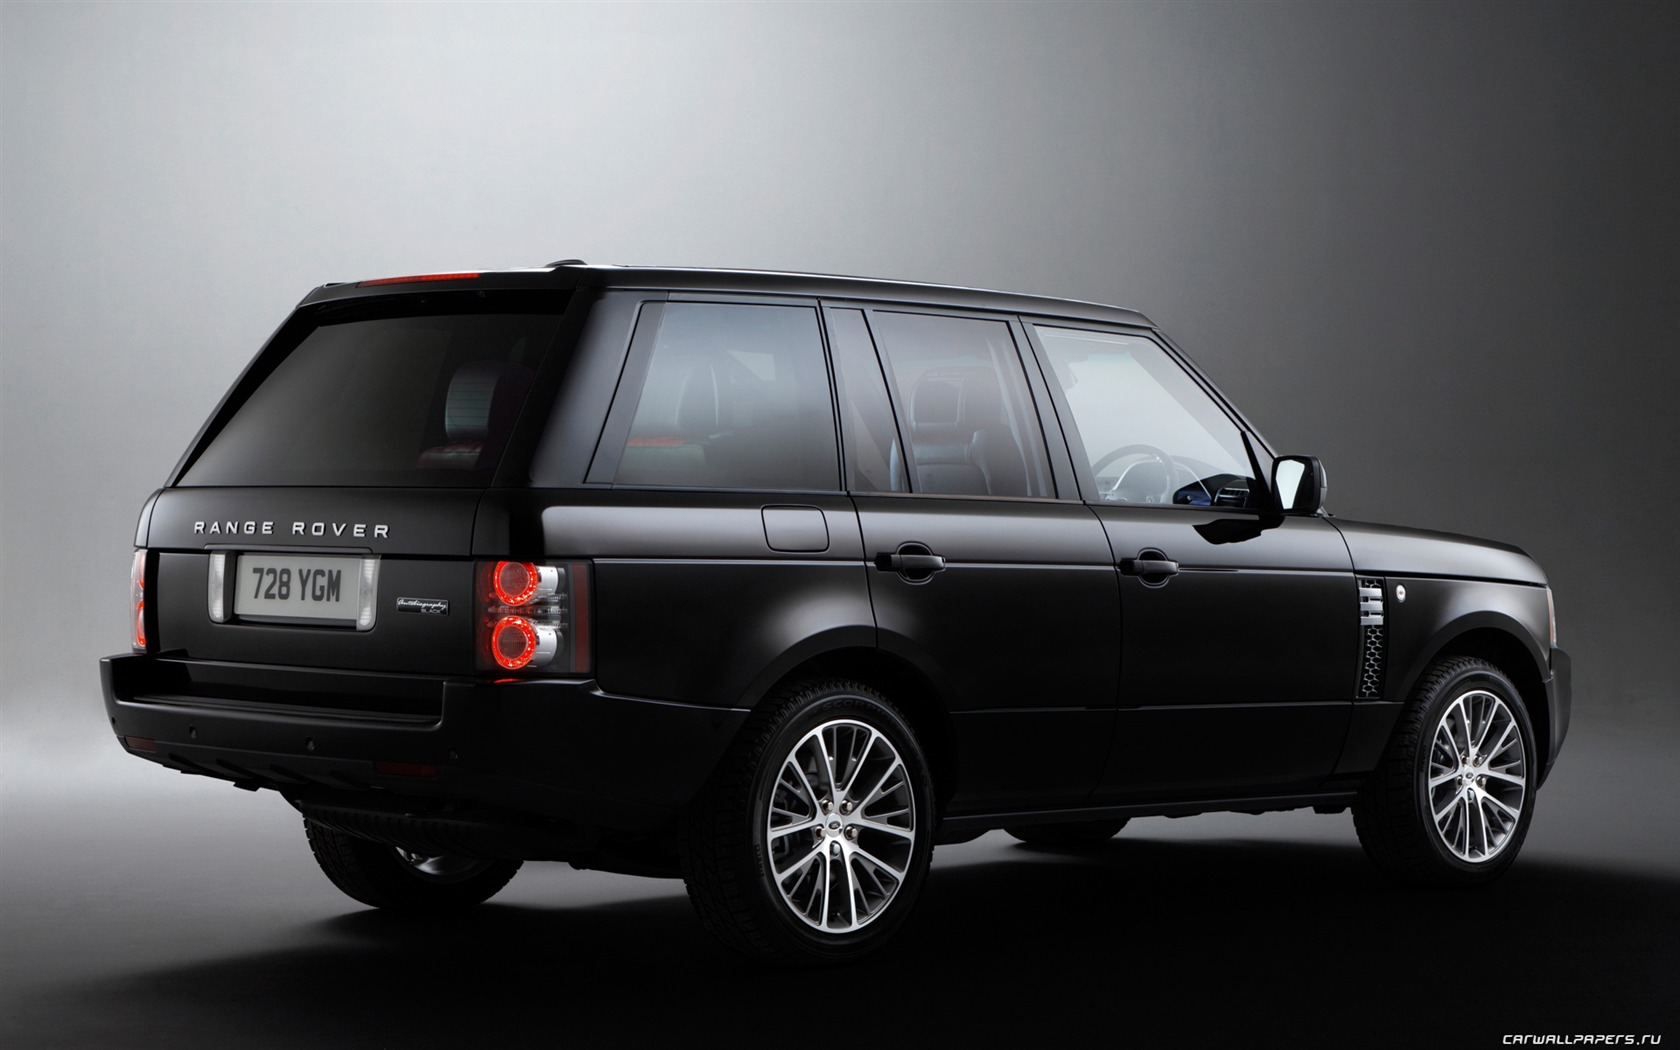 Land Rover Range Rover Black Edition - 2011 路虎19 - 1680x1050